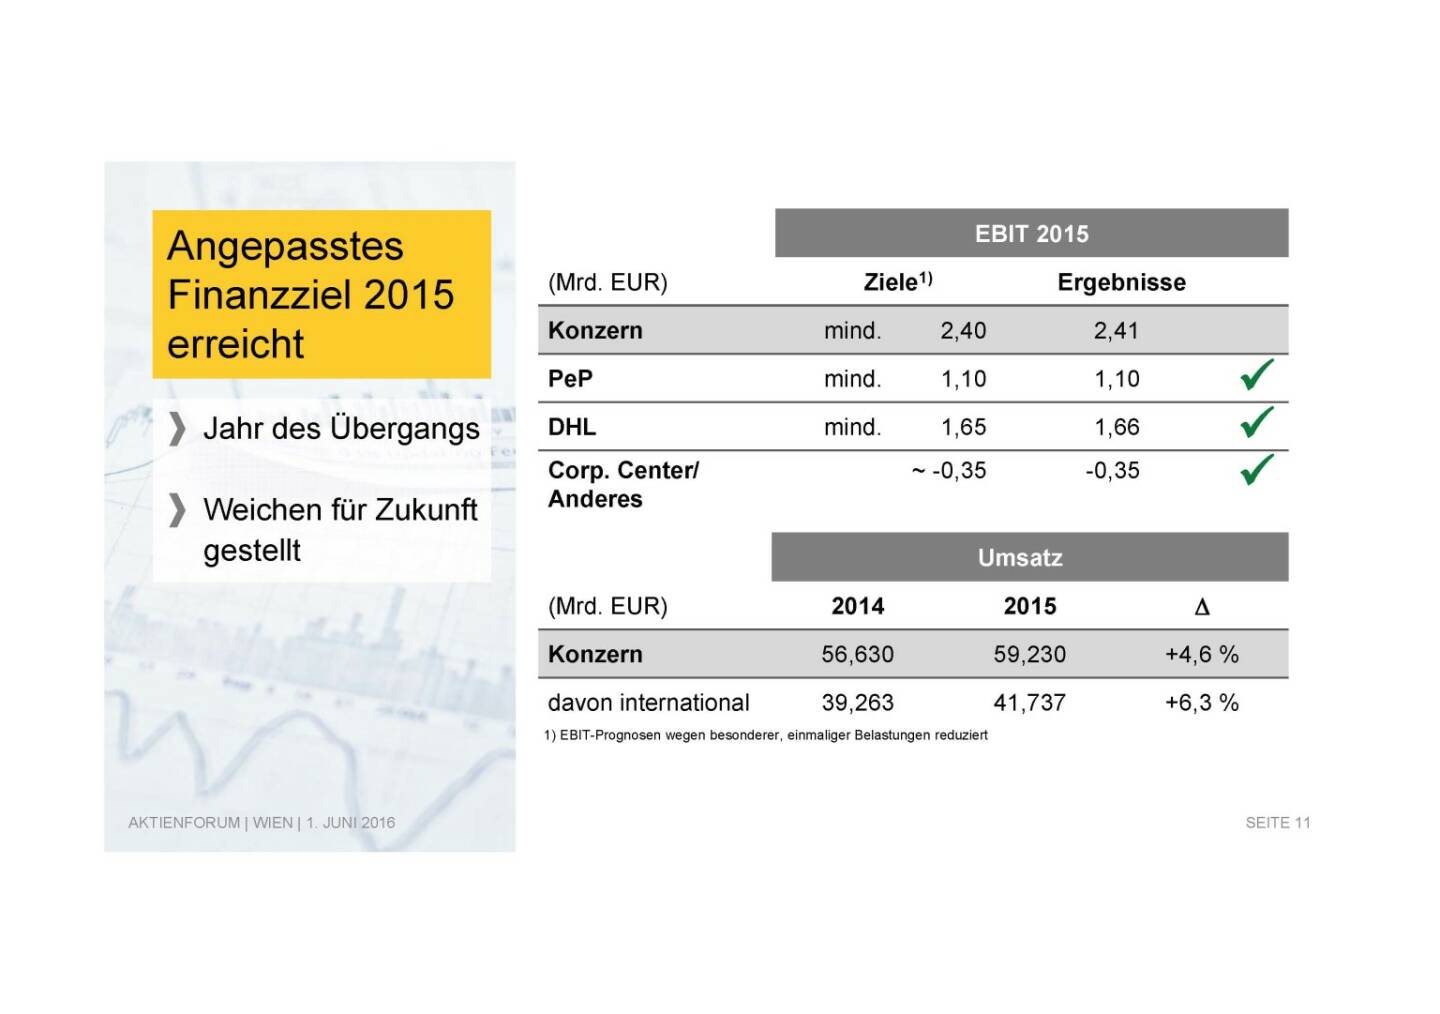 Deutsche Post - Angepasstes Finanzziel 2015